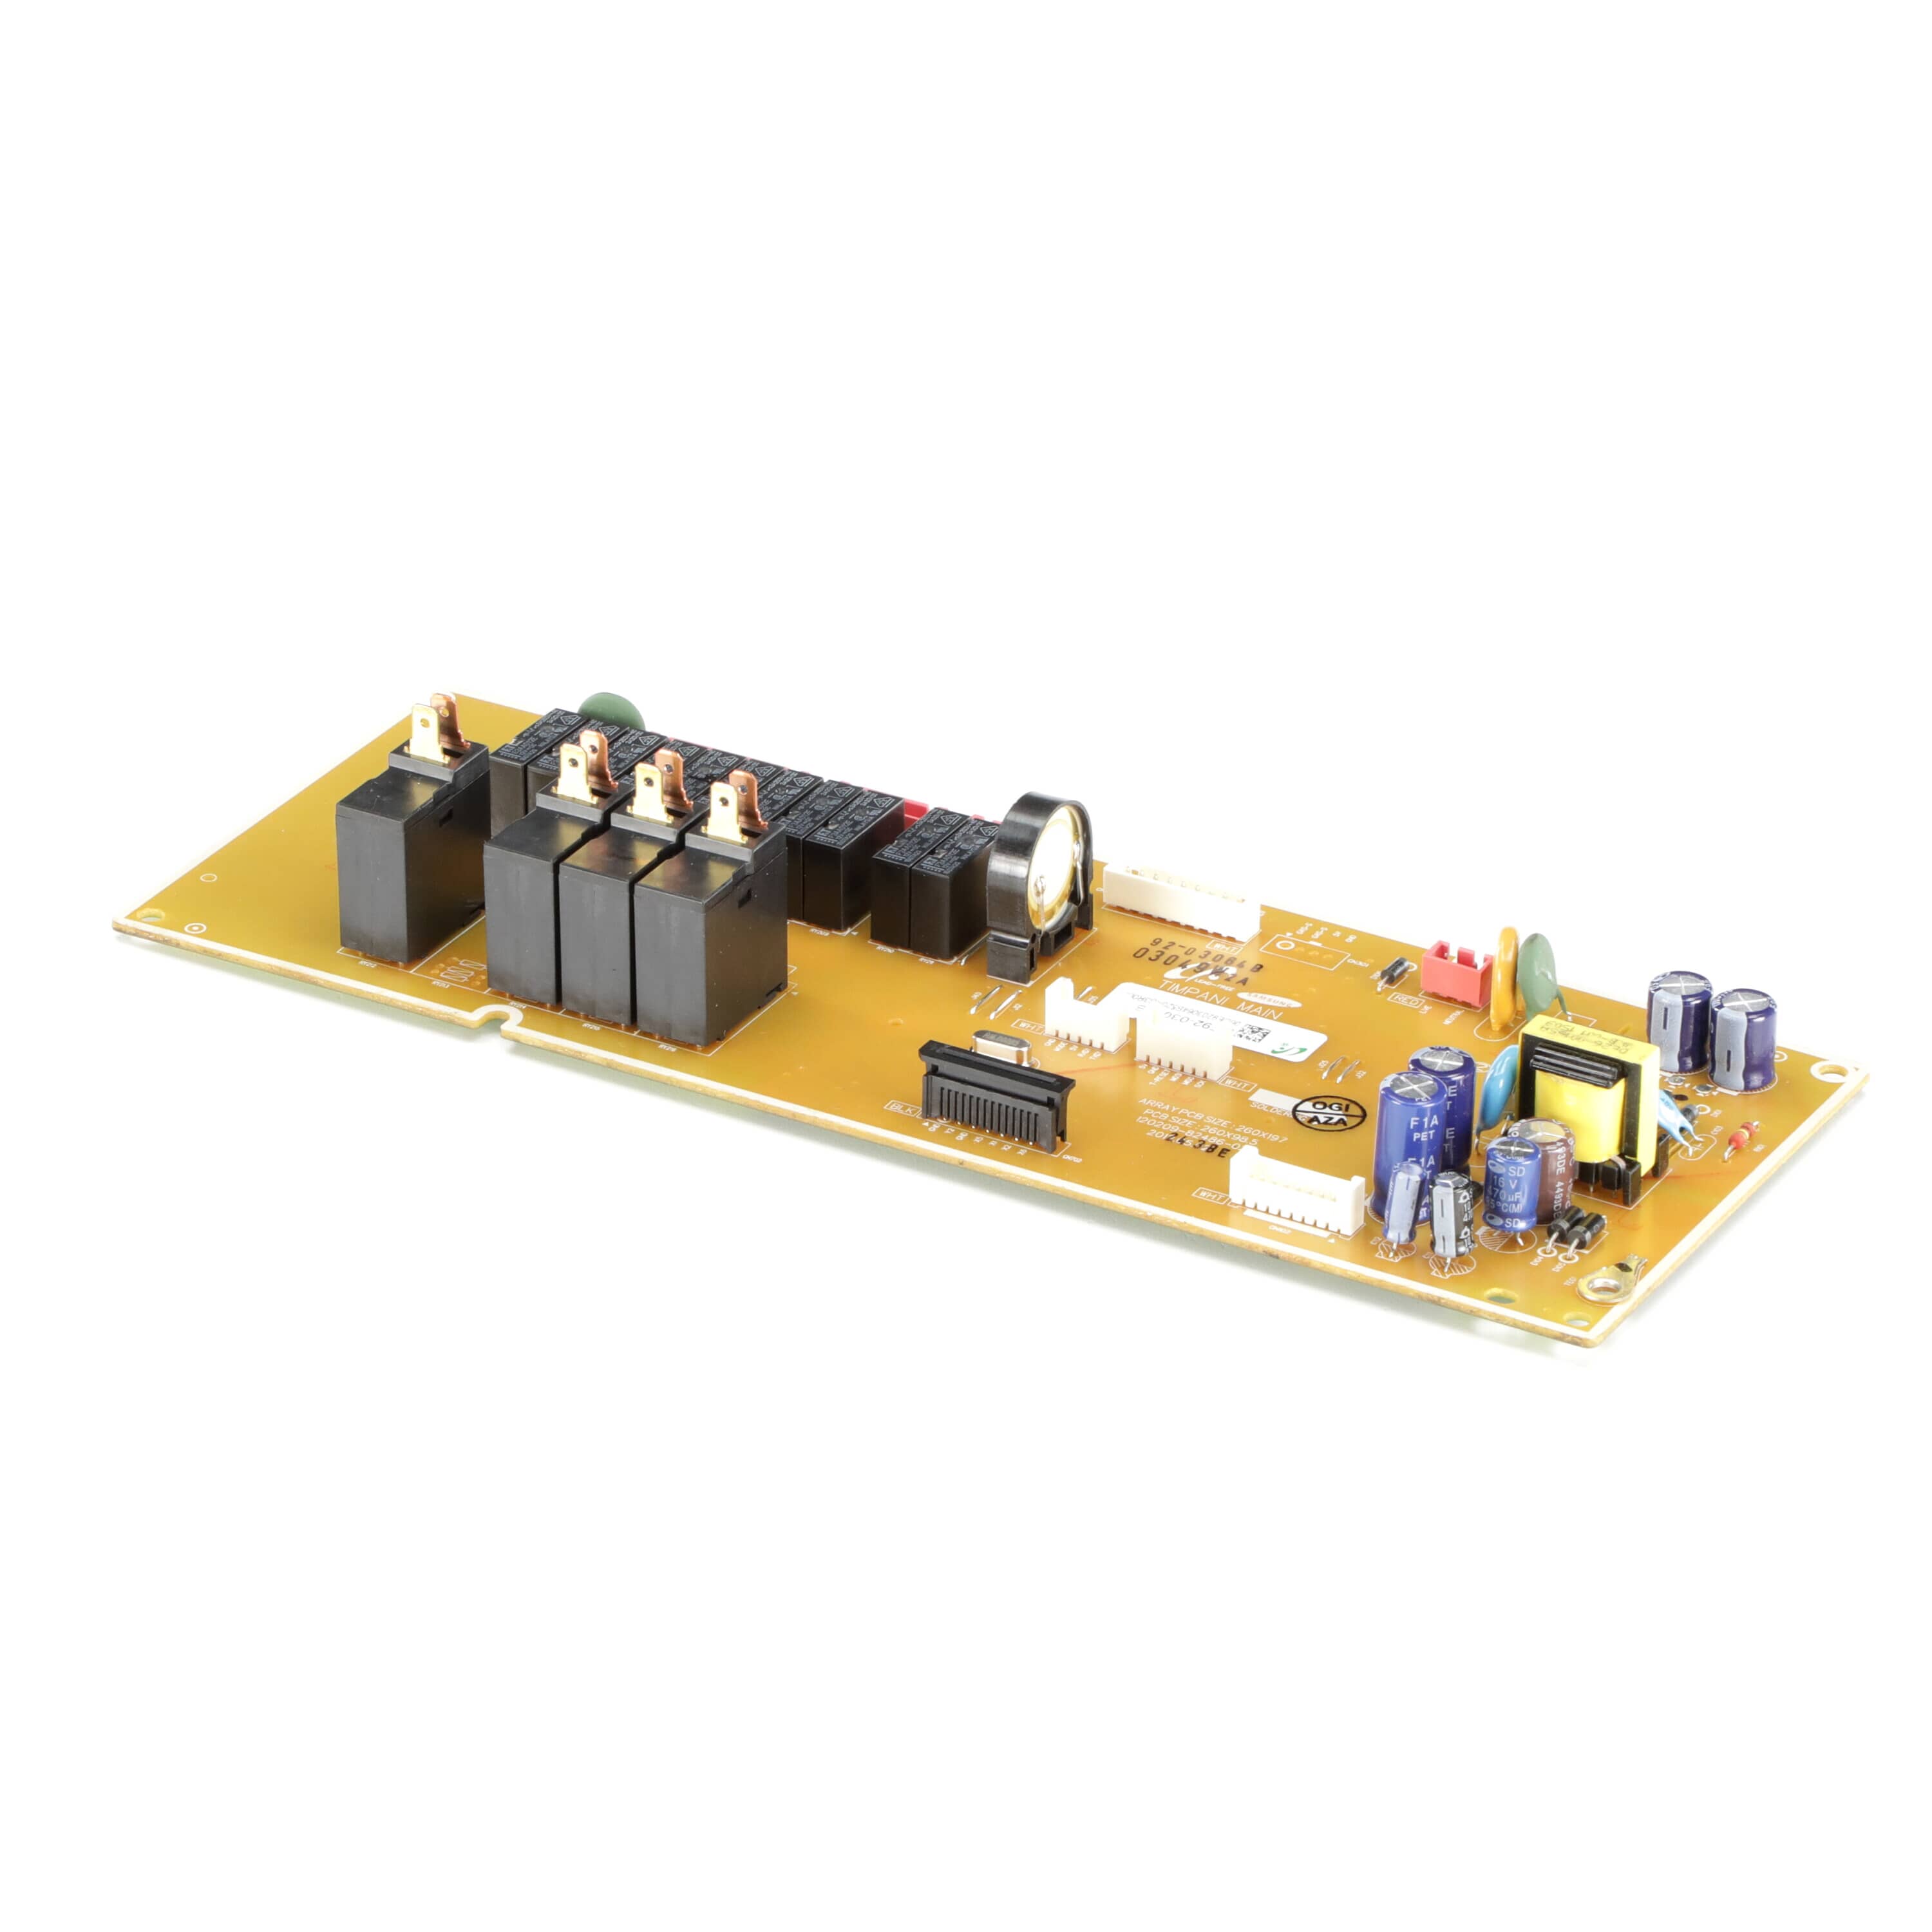 DE92-03064B Main PCB Board Assembly